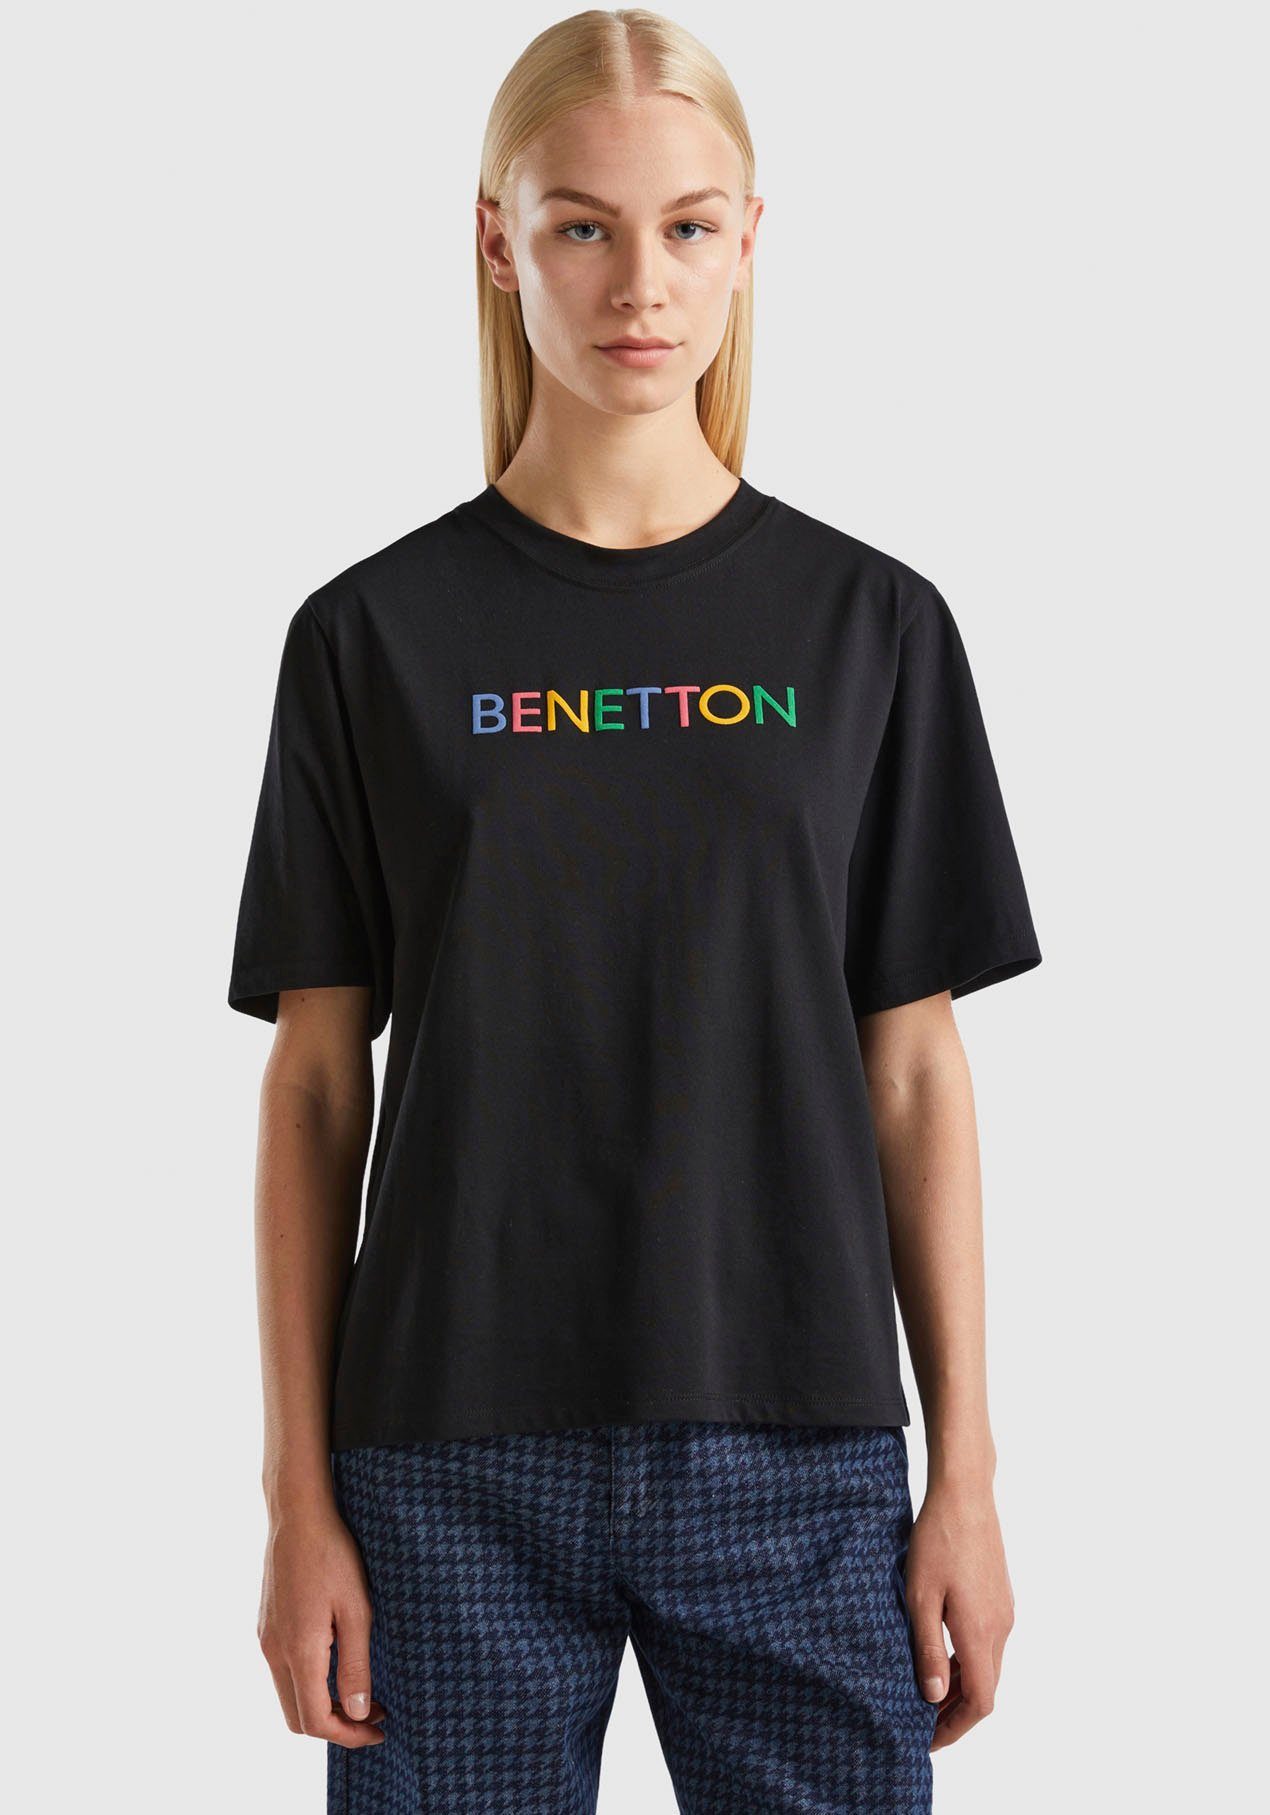 T-Shirt vorne Label-Schriftzug Benetton Colors of United mit